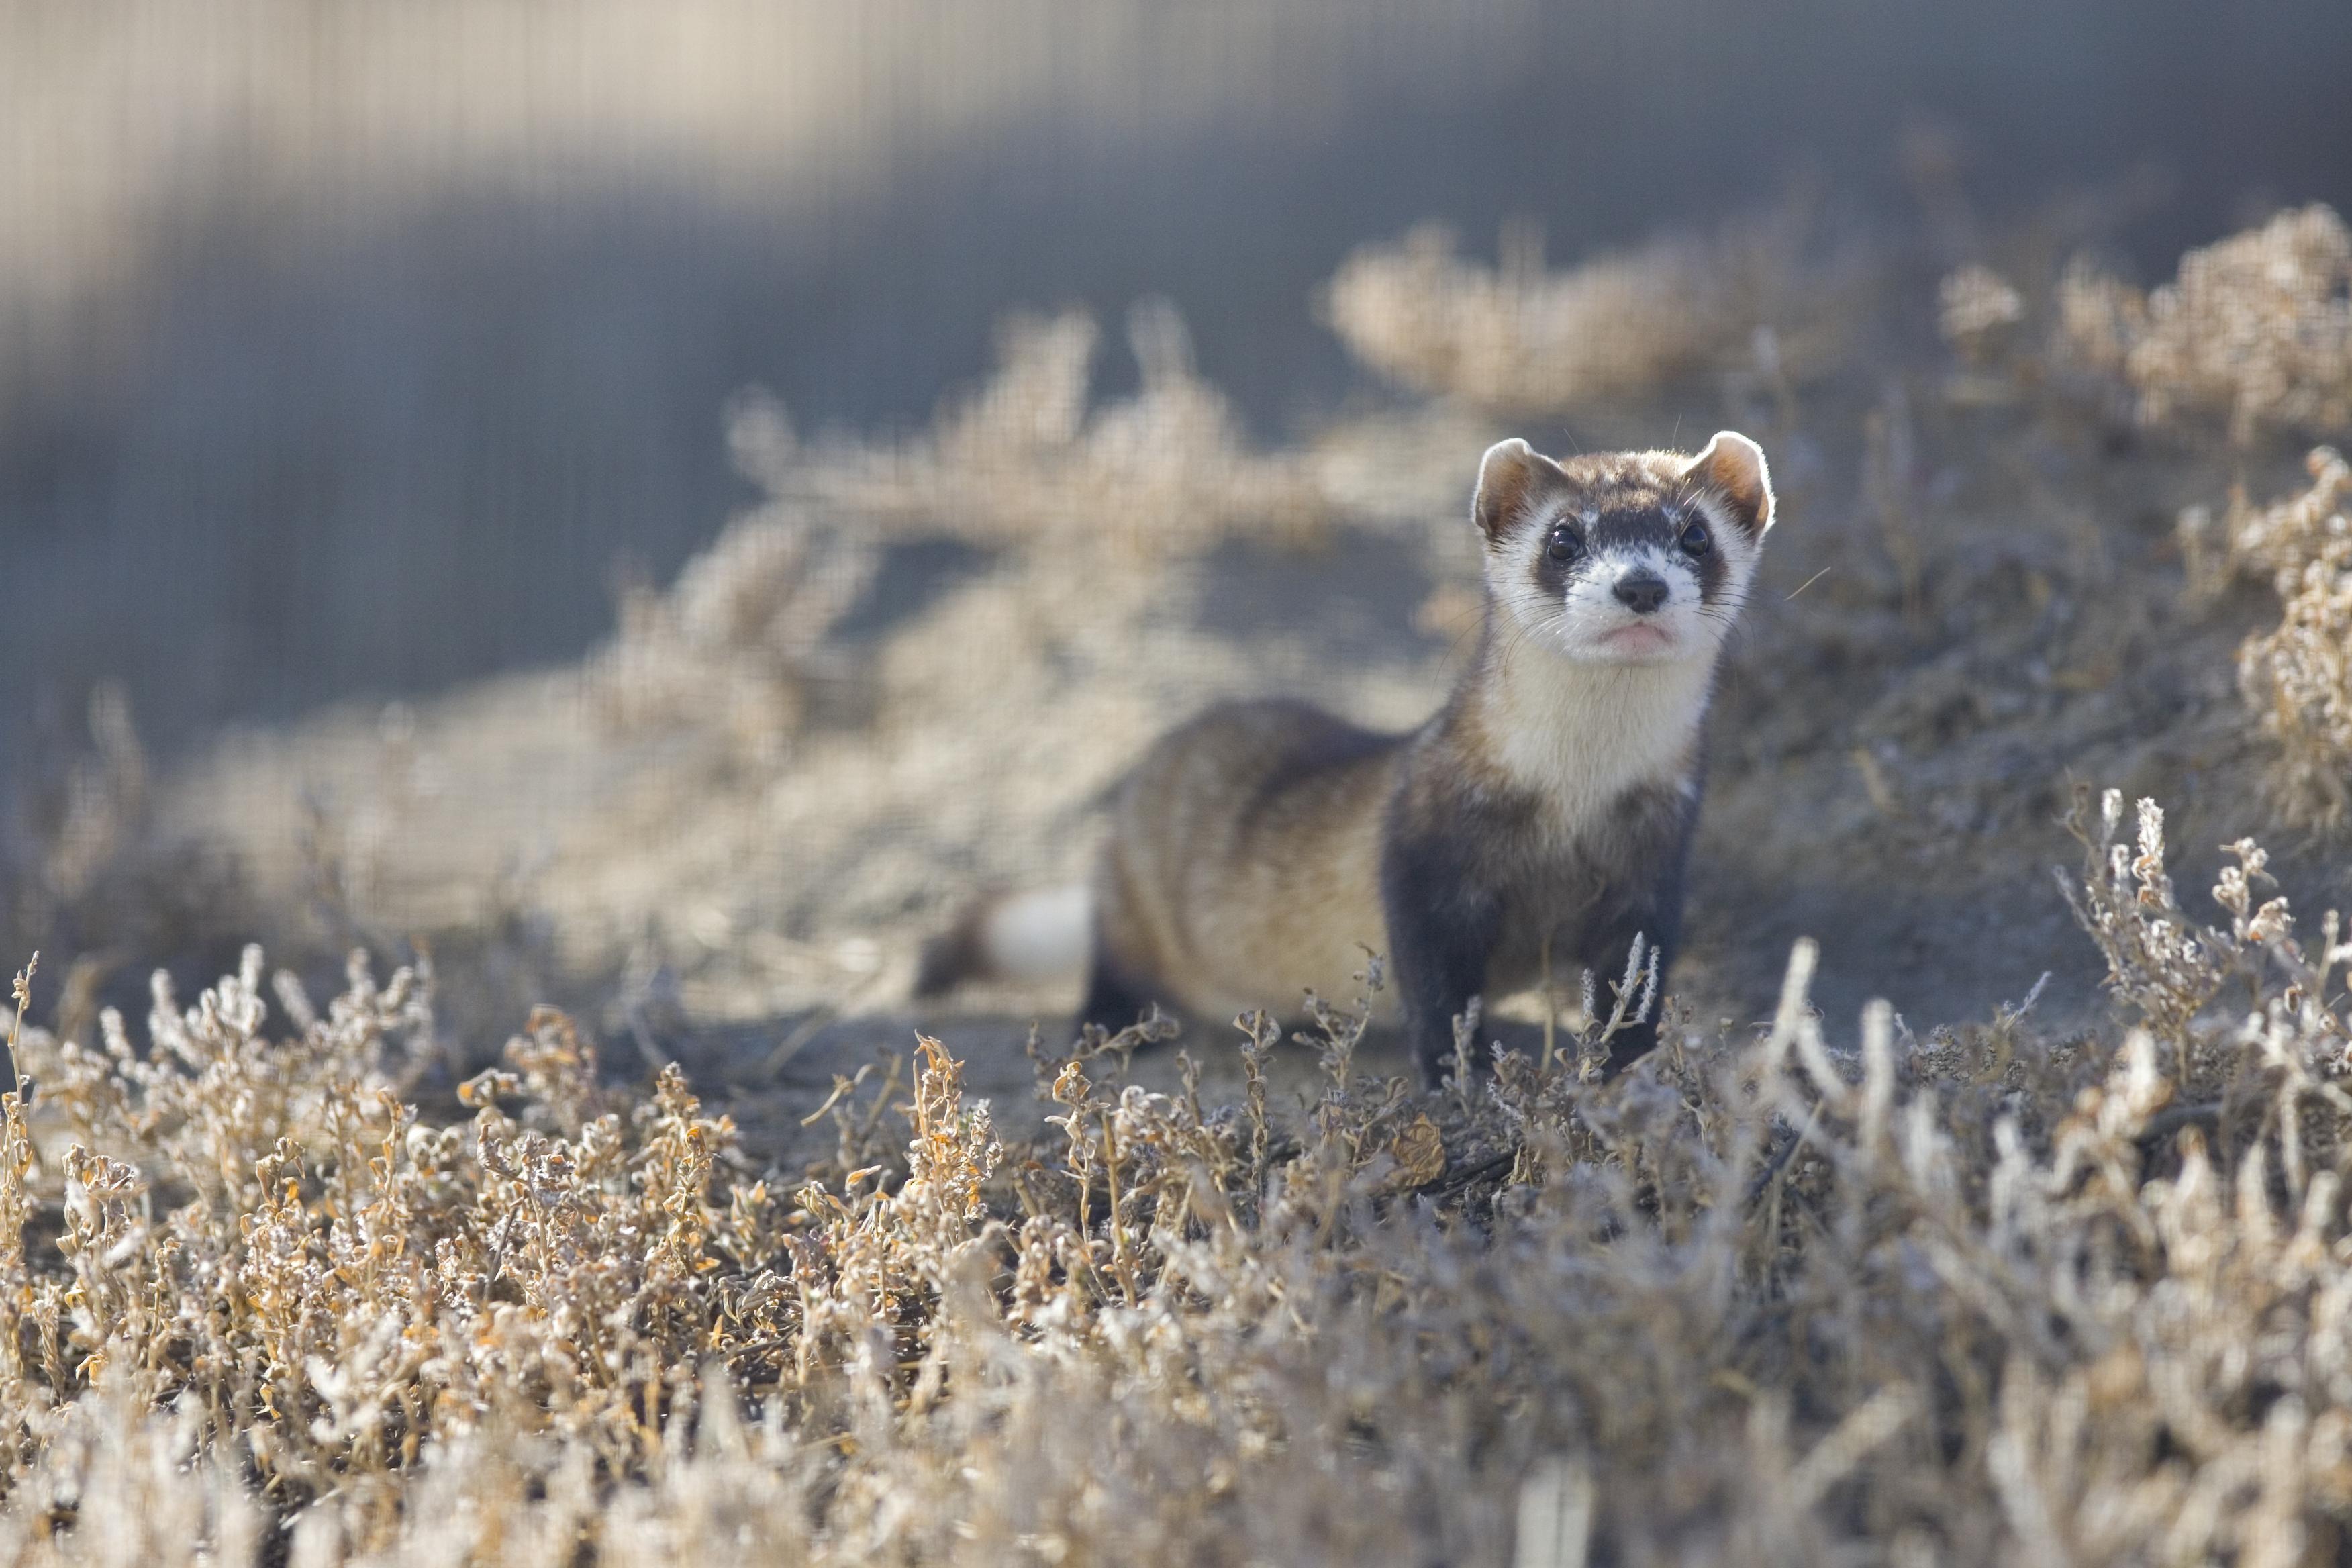 Ferrets skunks free image, public domain image